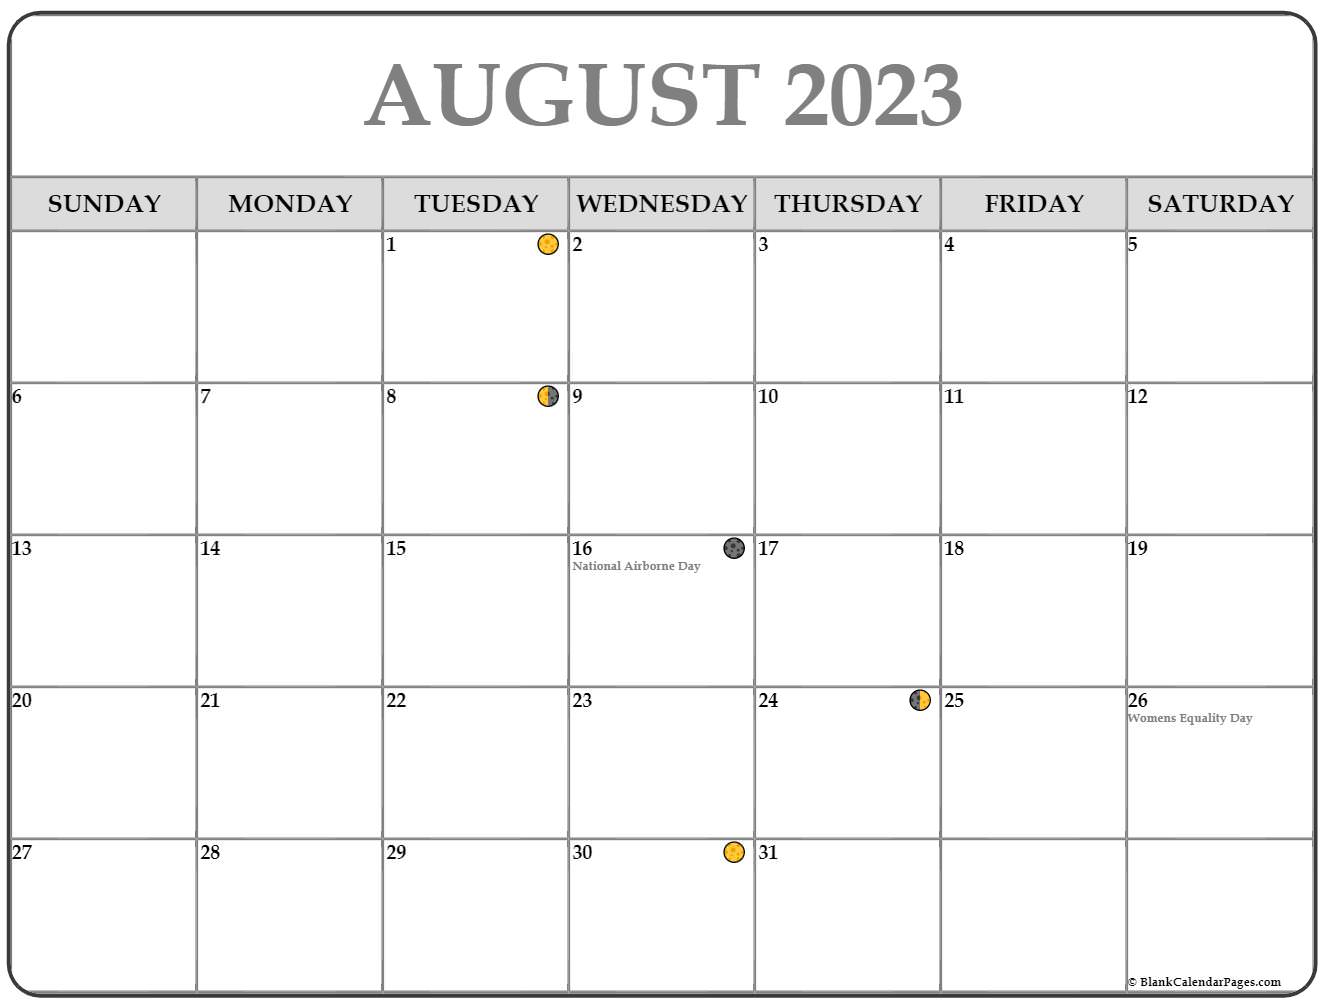 Lunar Calendar August 2023 Moon Phases PELAJARAN